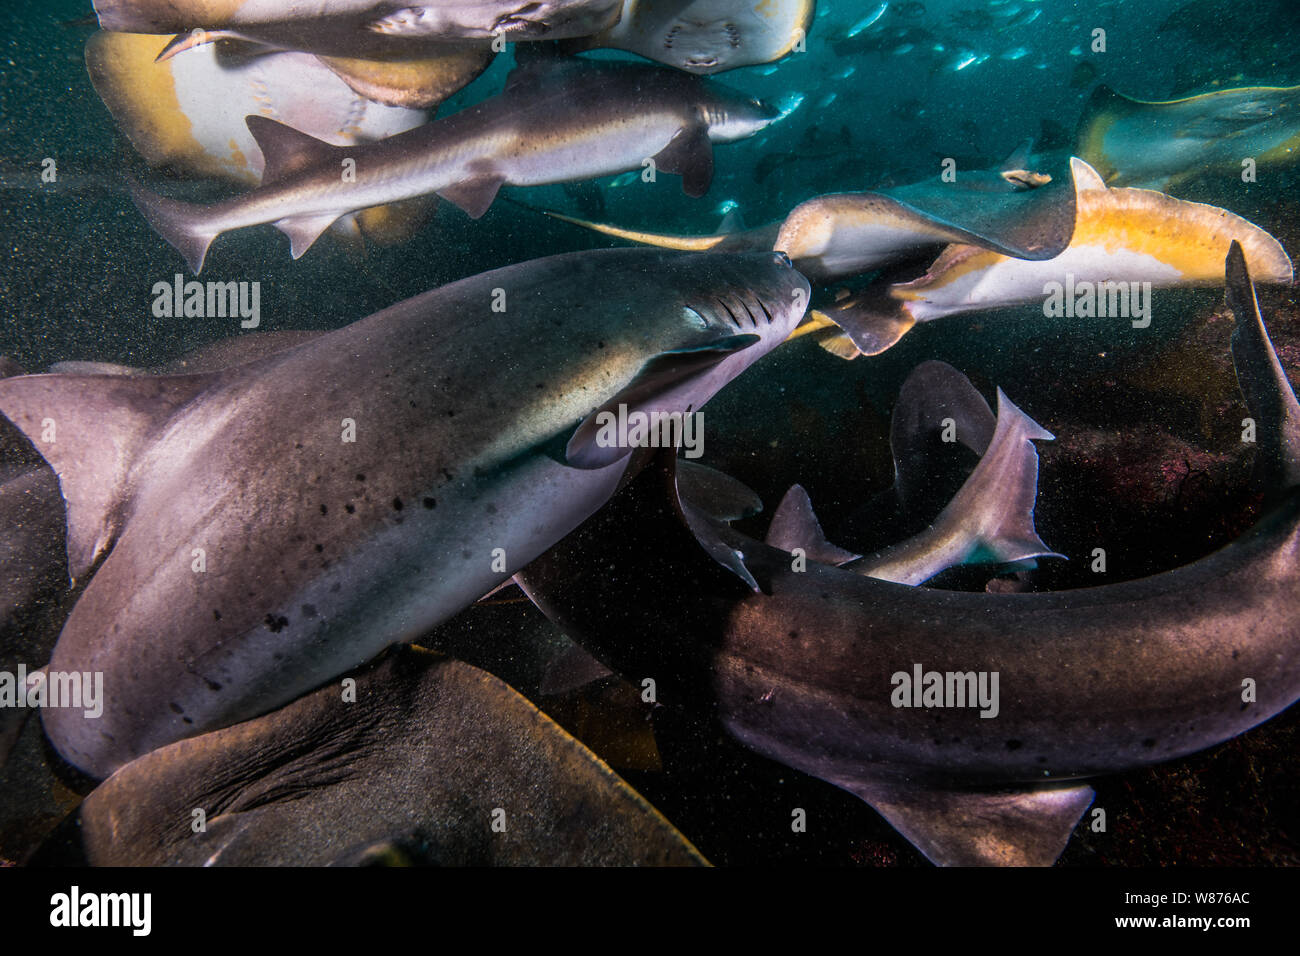 The mob of Banded Hound Sharks and Japanese stingrays rushing to the bait. Japan. Ito, Tateyama, Chiba, Japan (close-up) Stock Photo